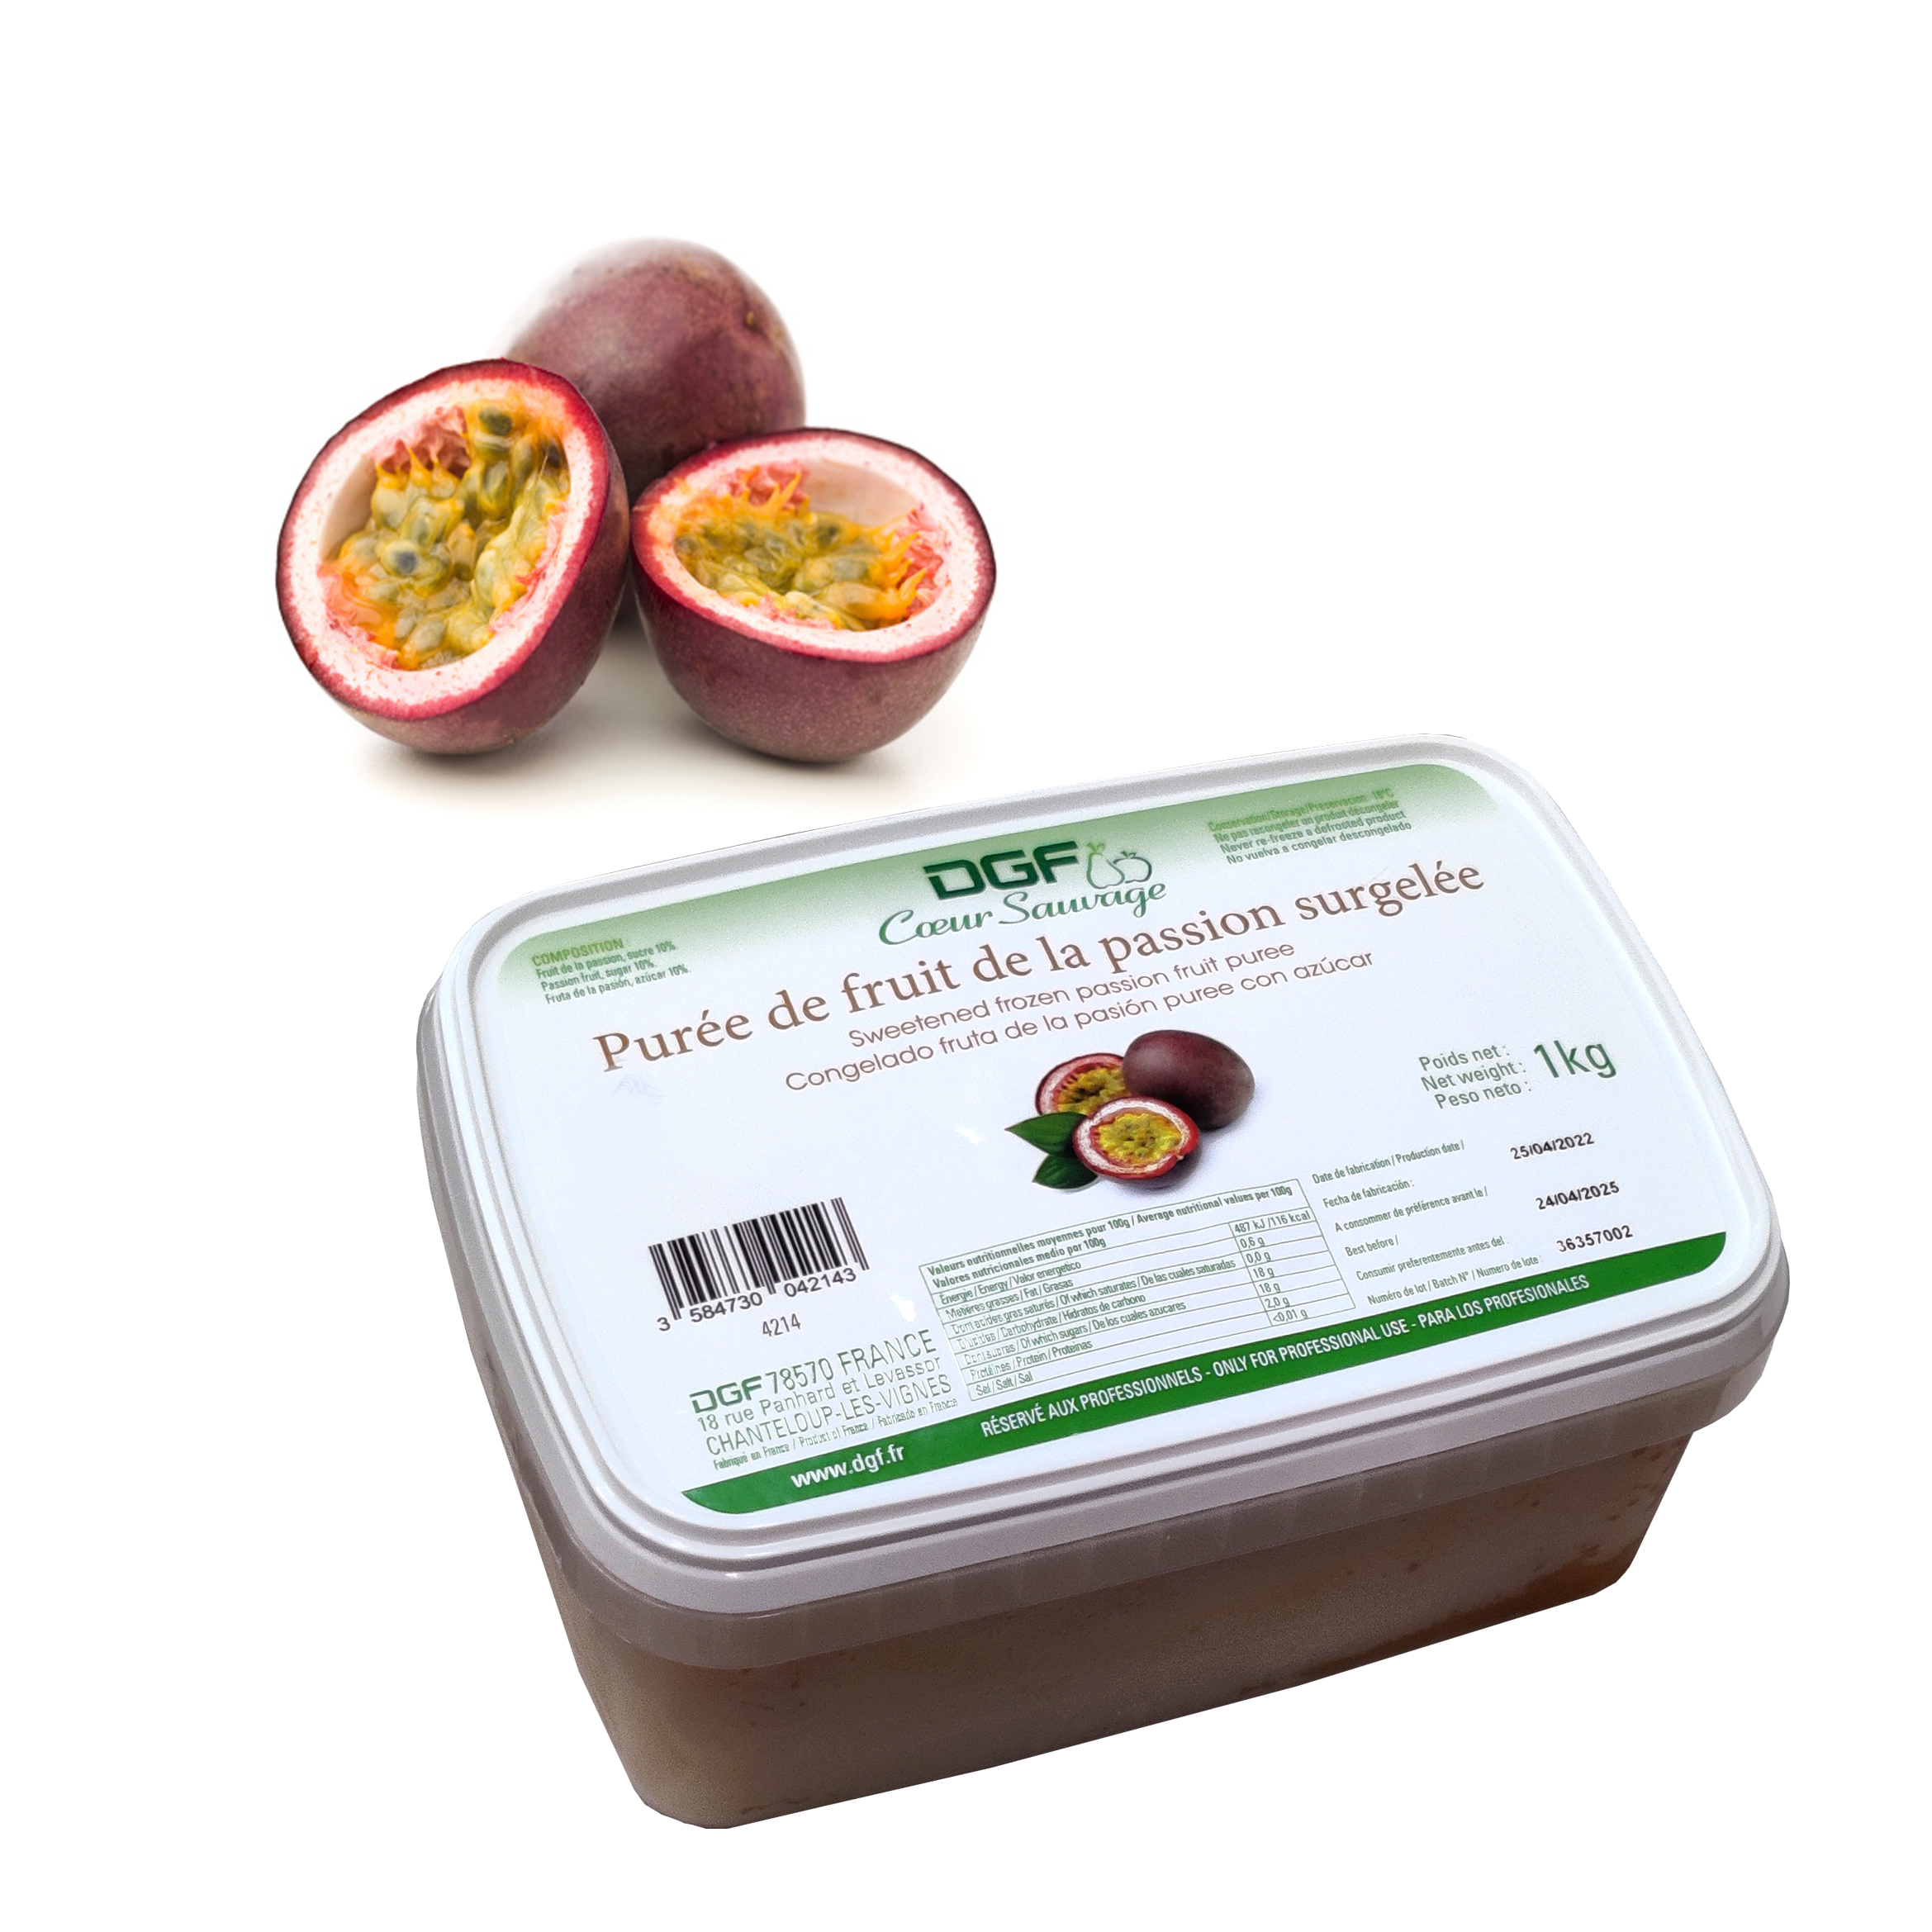 Passion Fruit Puree, Buy Online